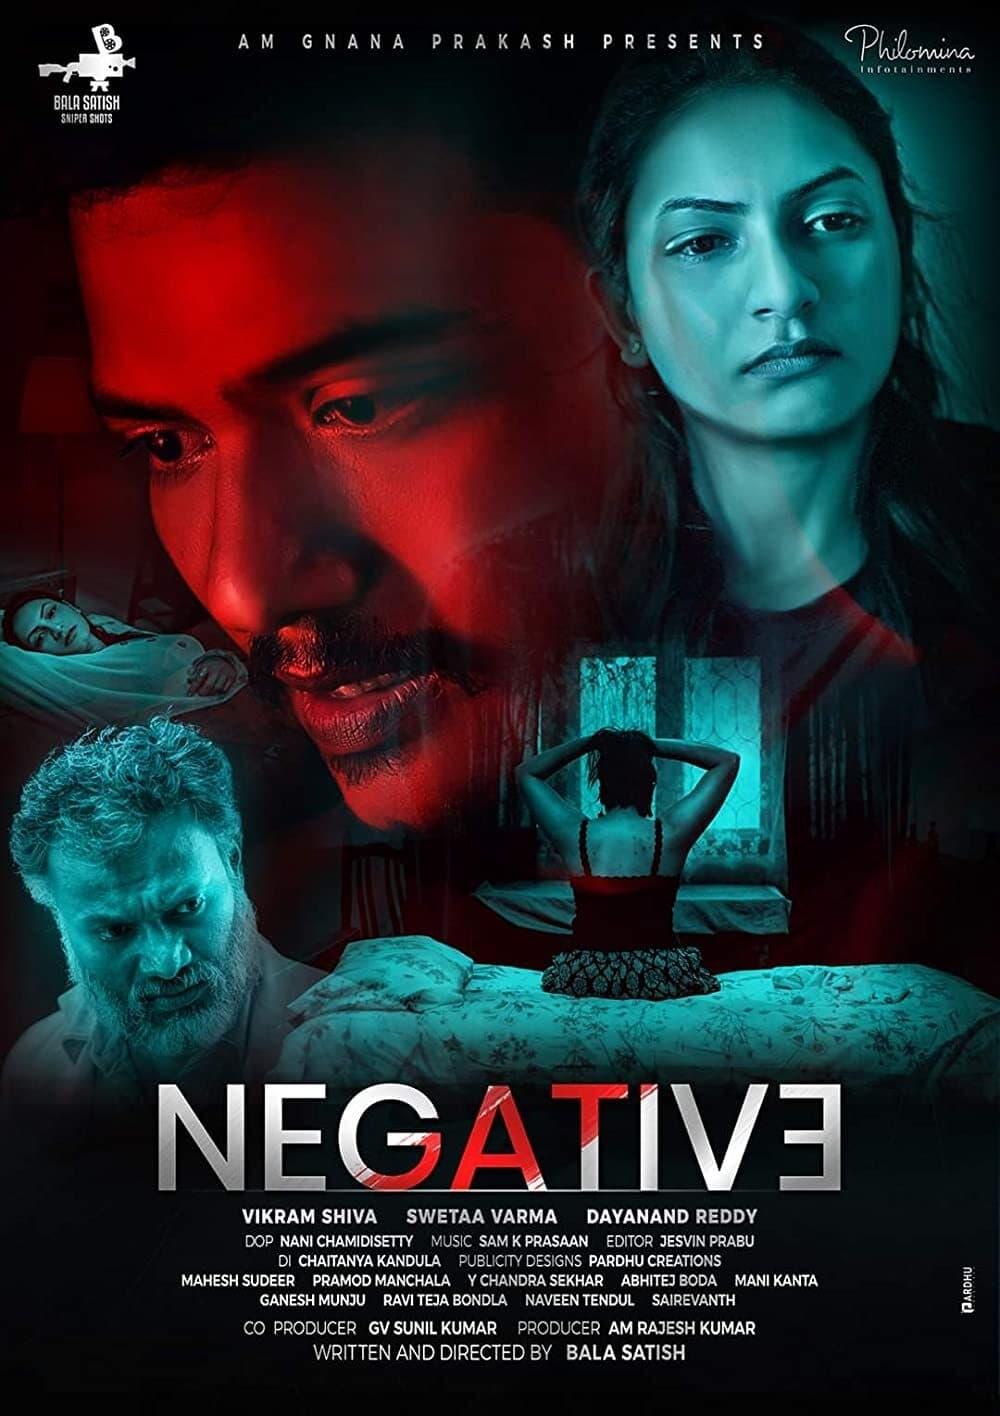 Negative poster